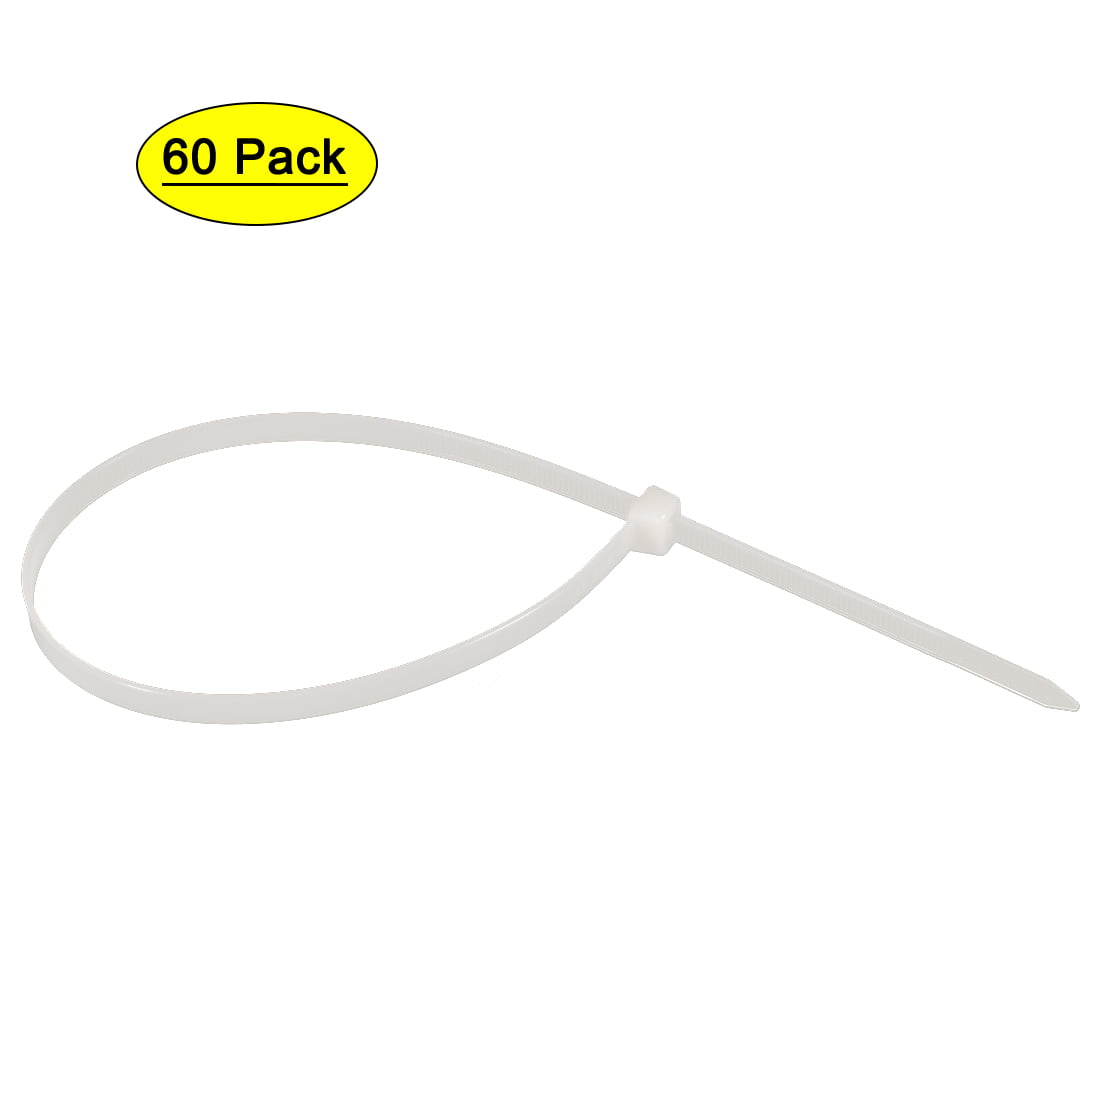 NA 100pcs Zip Cable Ties 20 Inch x 0.2 Inch Self Adhesive Nylon Tie Wraps White